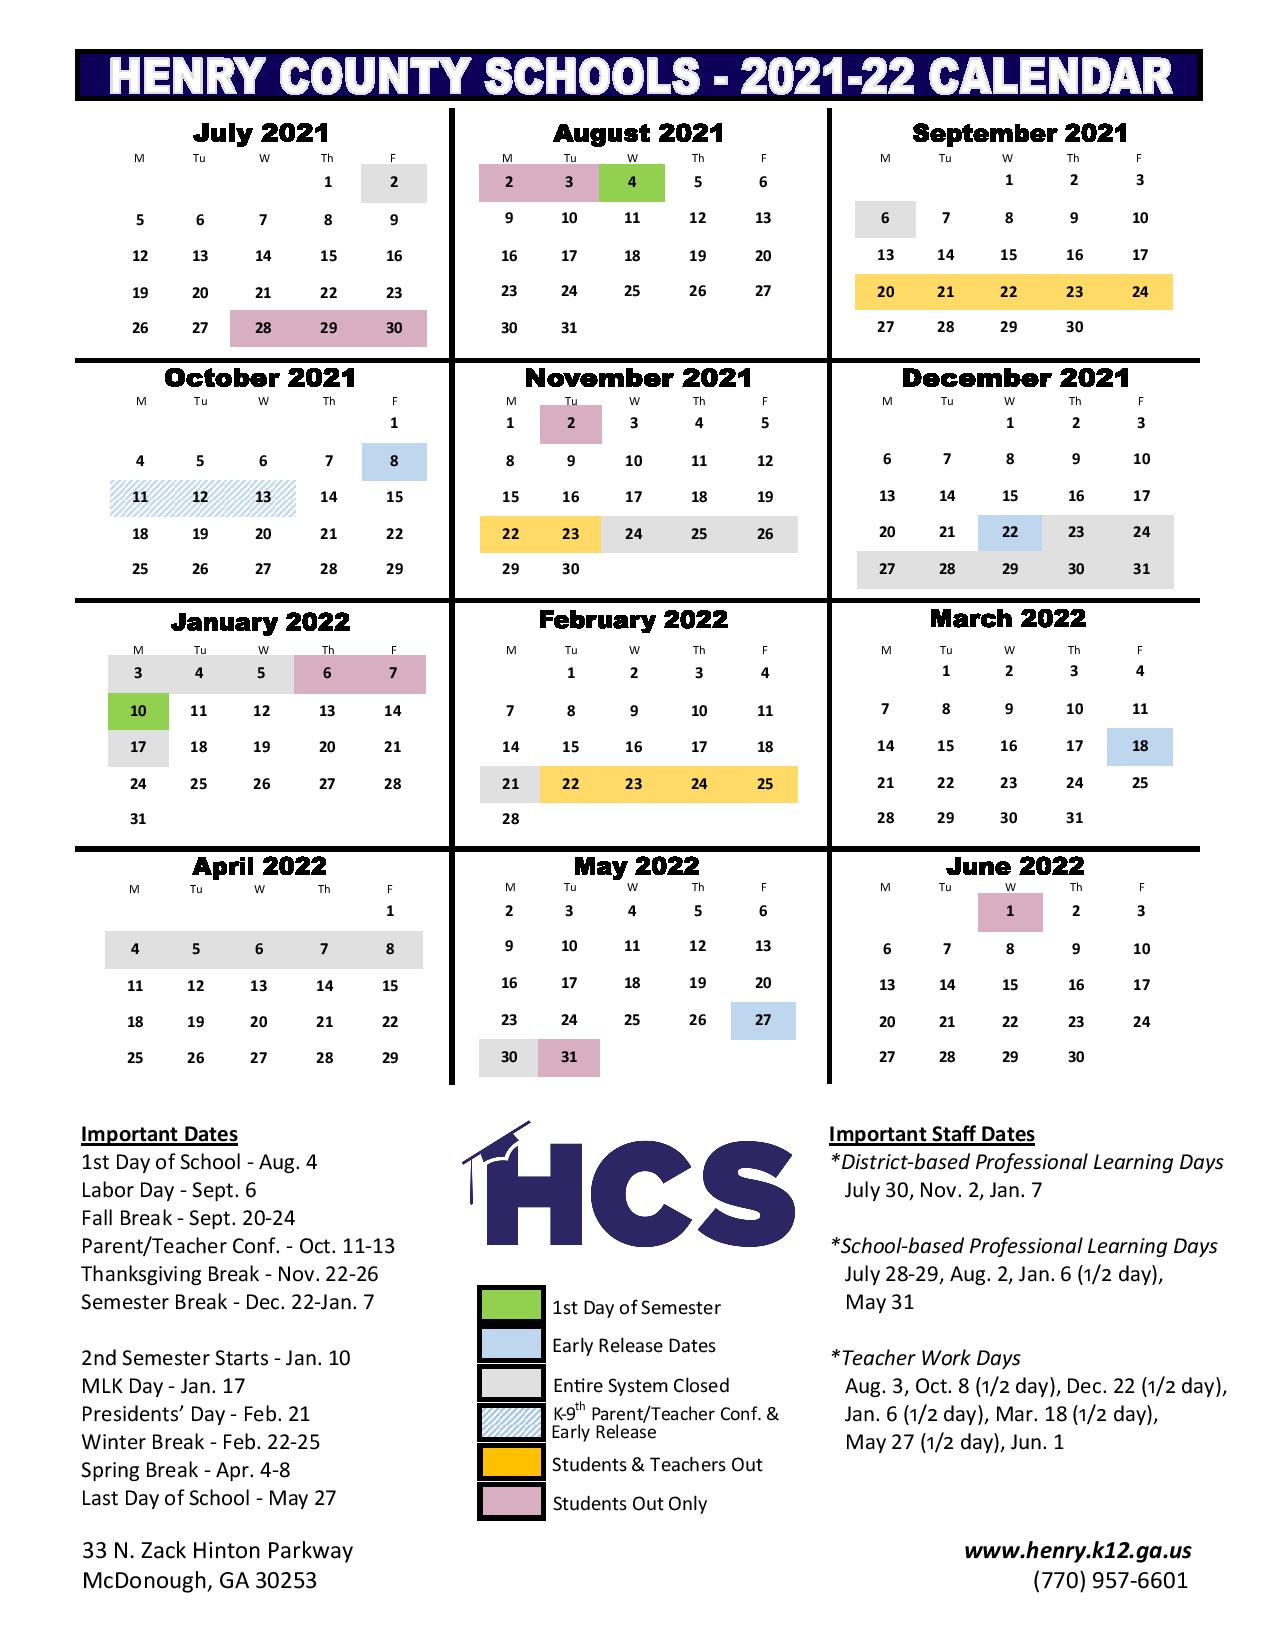 Henry County School Calendar 2021-2022 in PDF